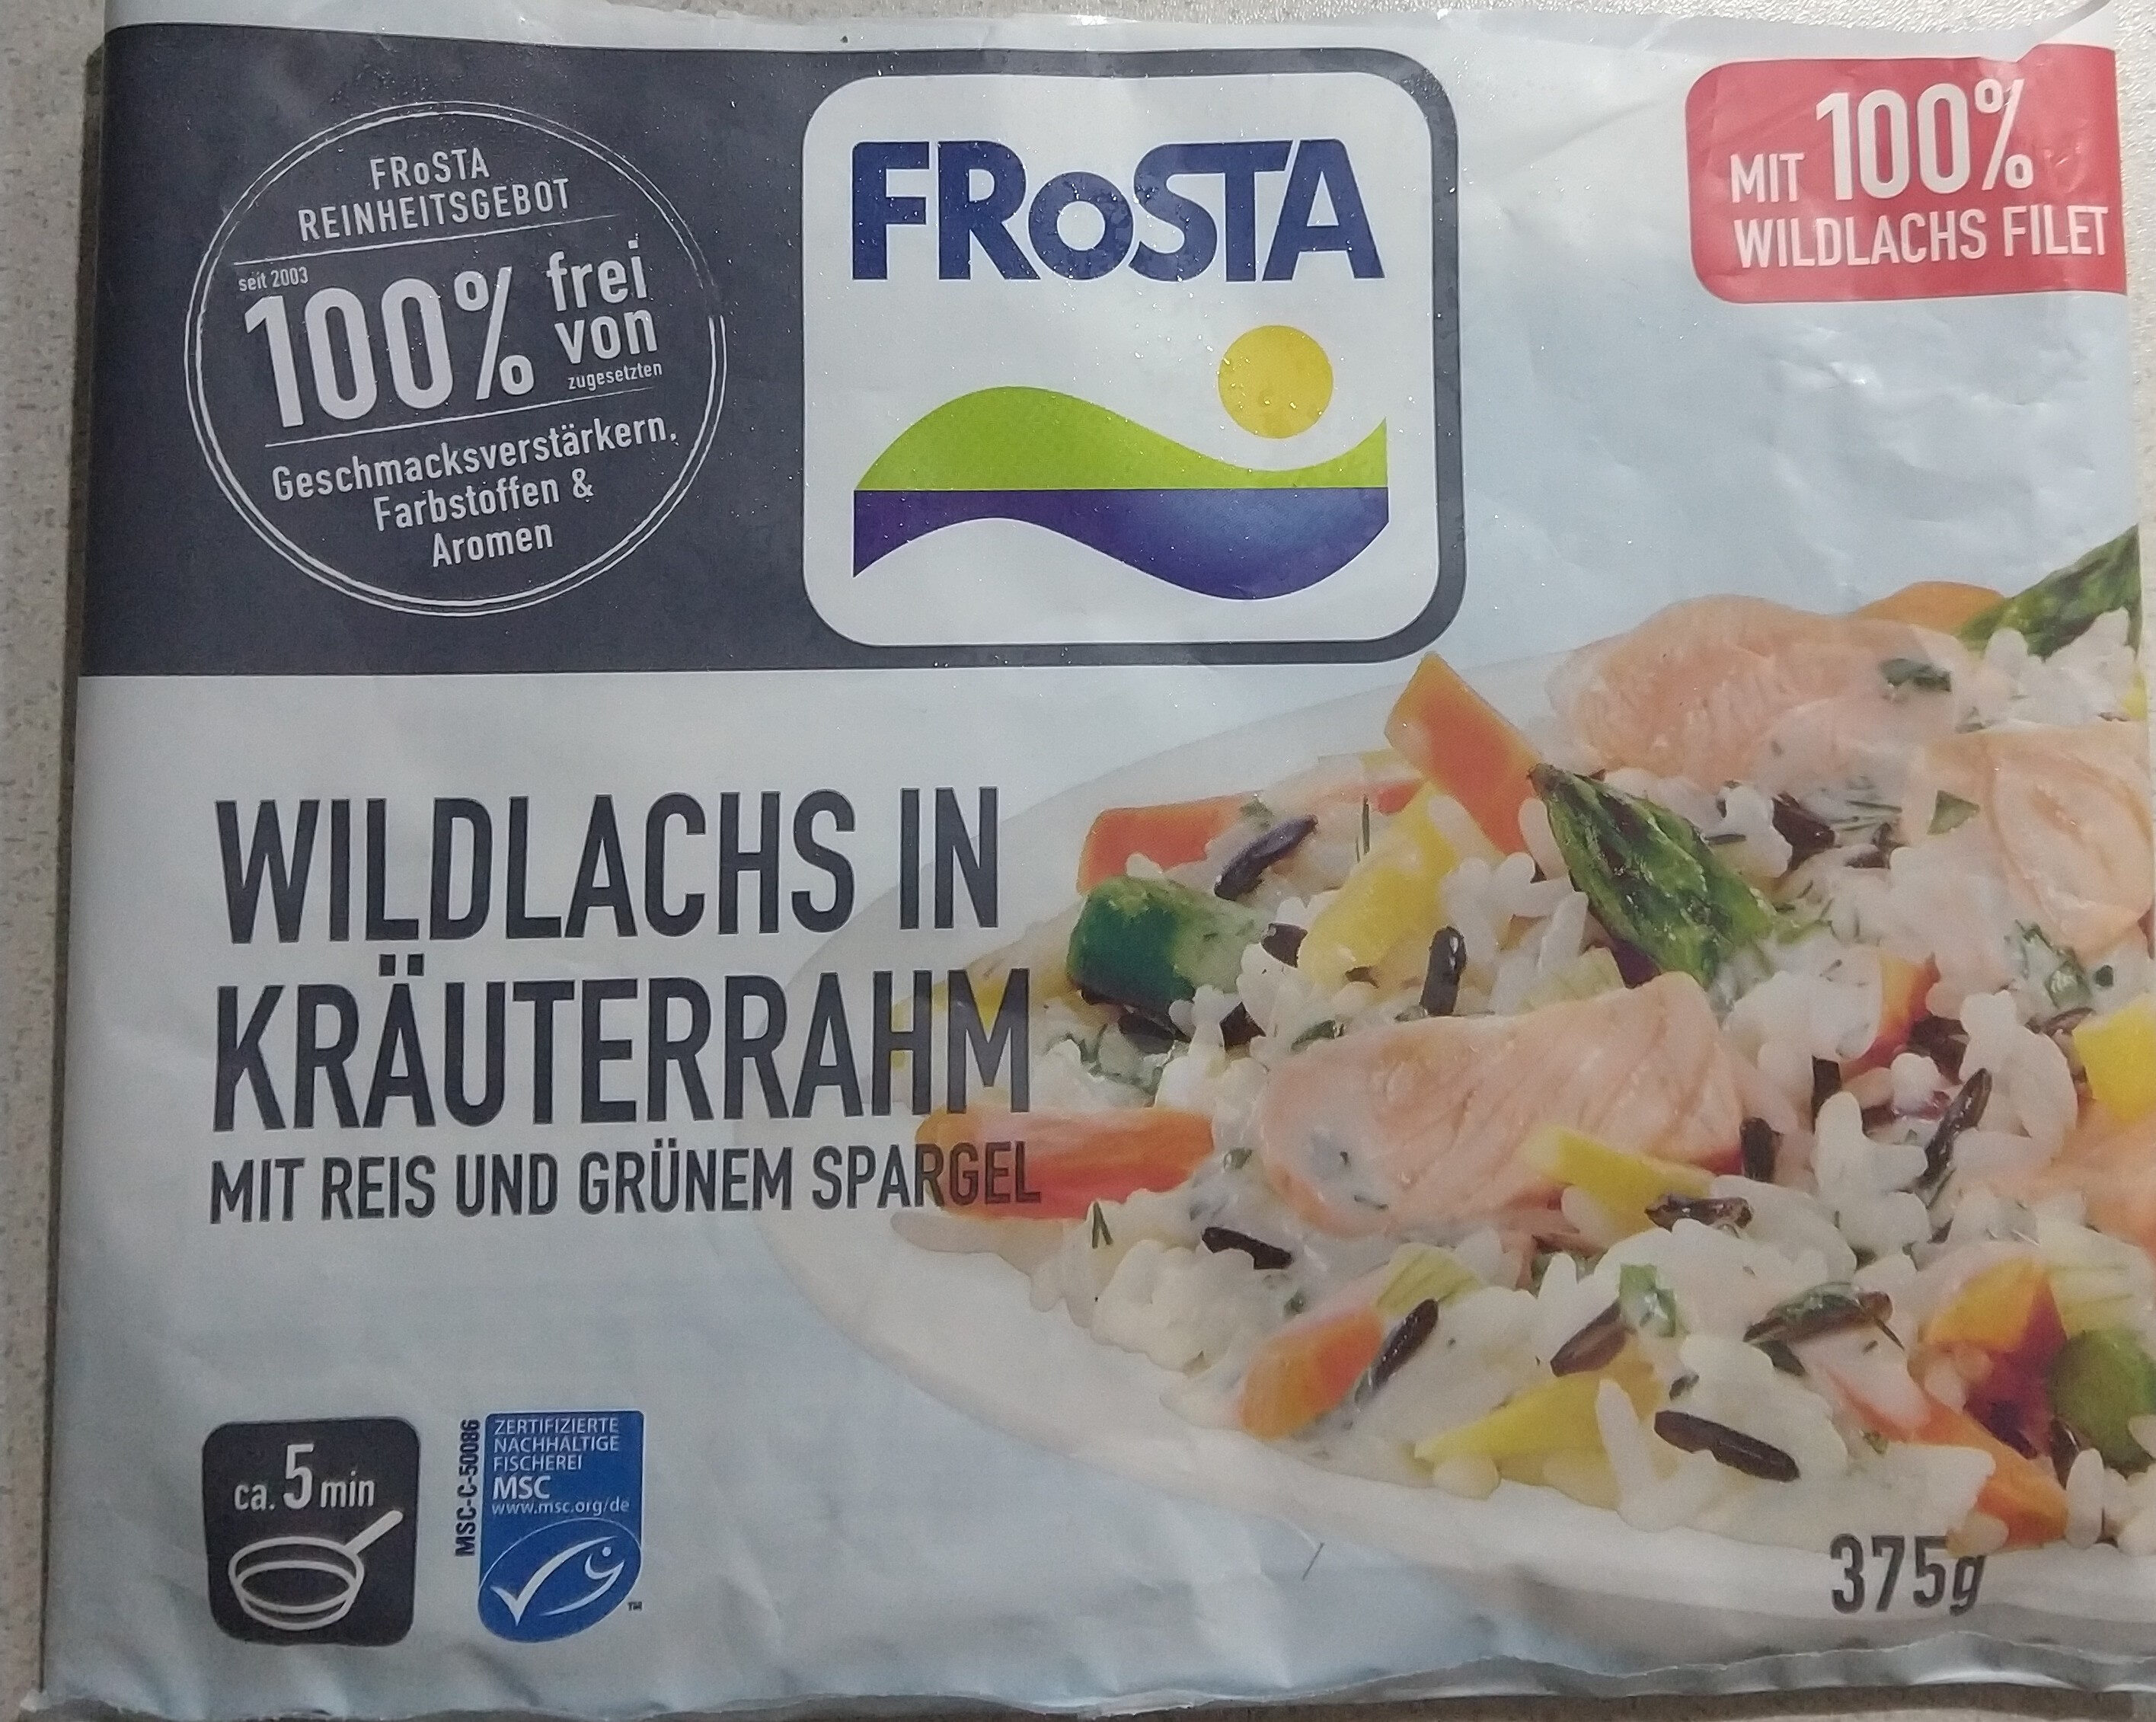 Frosta wildlachs in kräuterrahm - Produkt - de